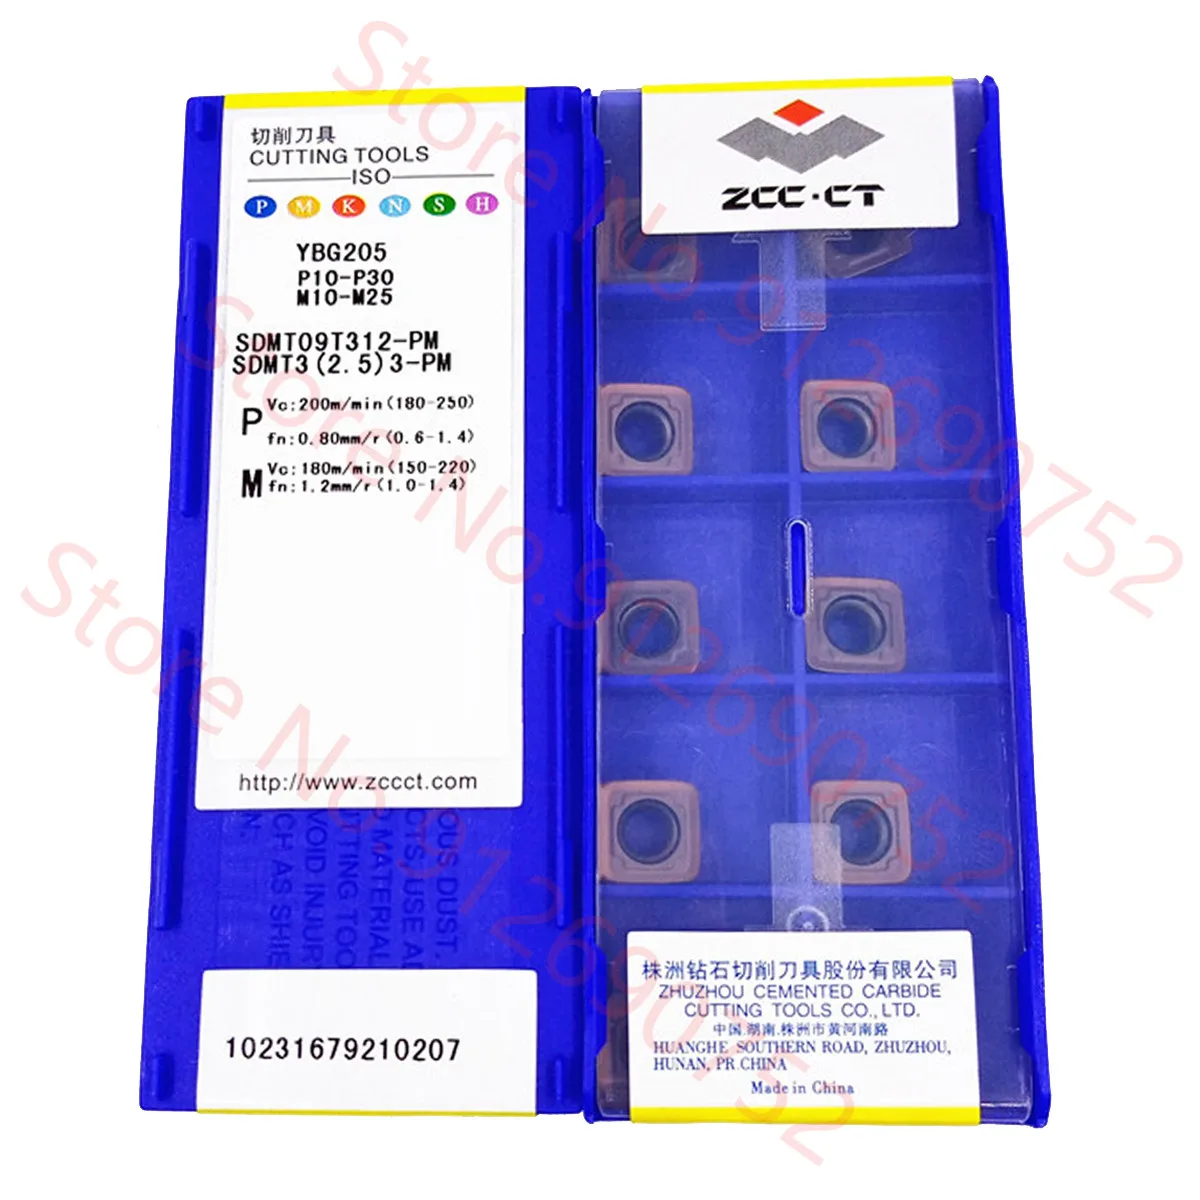 

100% Originais ZCC.CT SDMT09T312-PM YBG205/SDMT120412-PM YBG205 10pcs Milling Cutter Carbide Insert CNC Lathe Tools